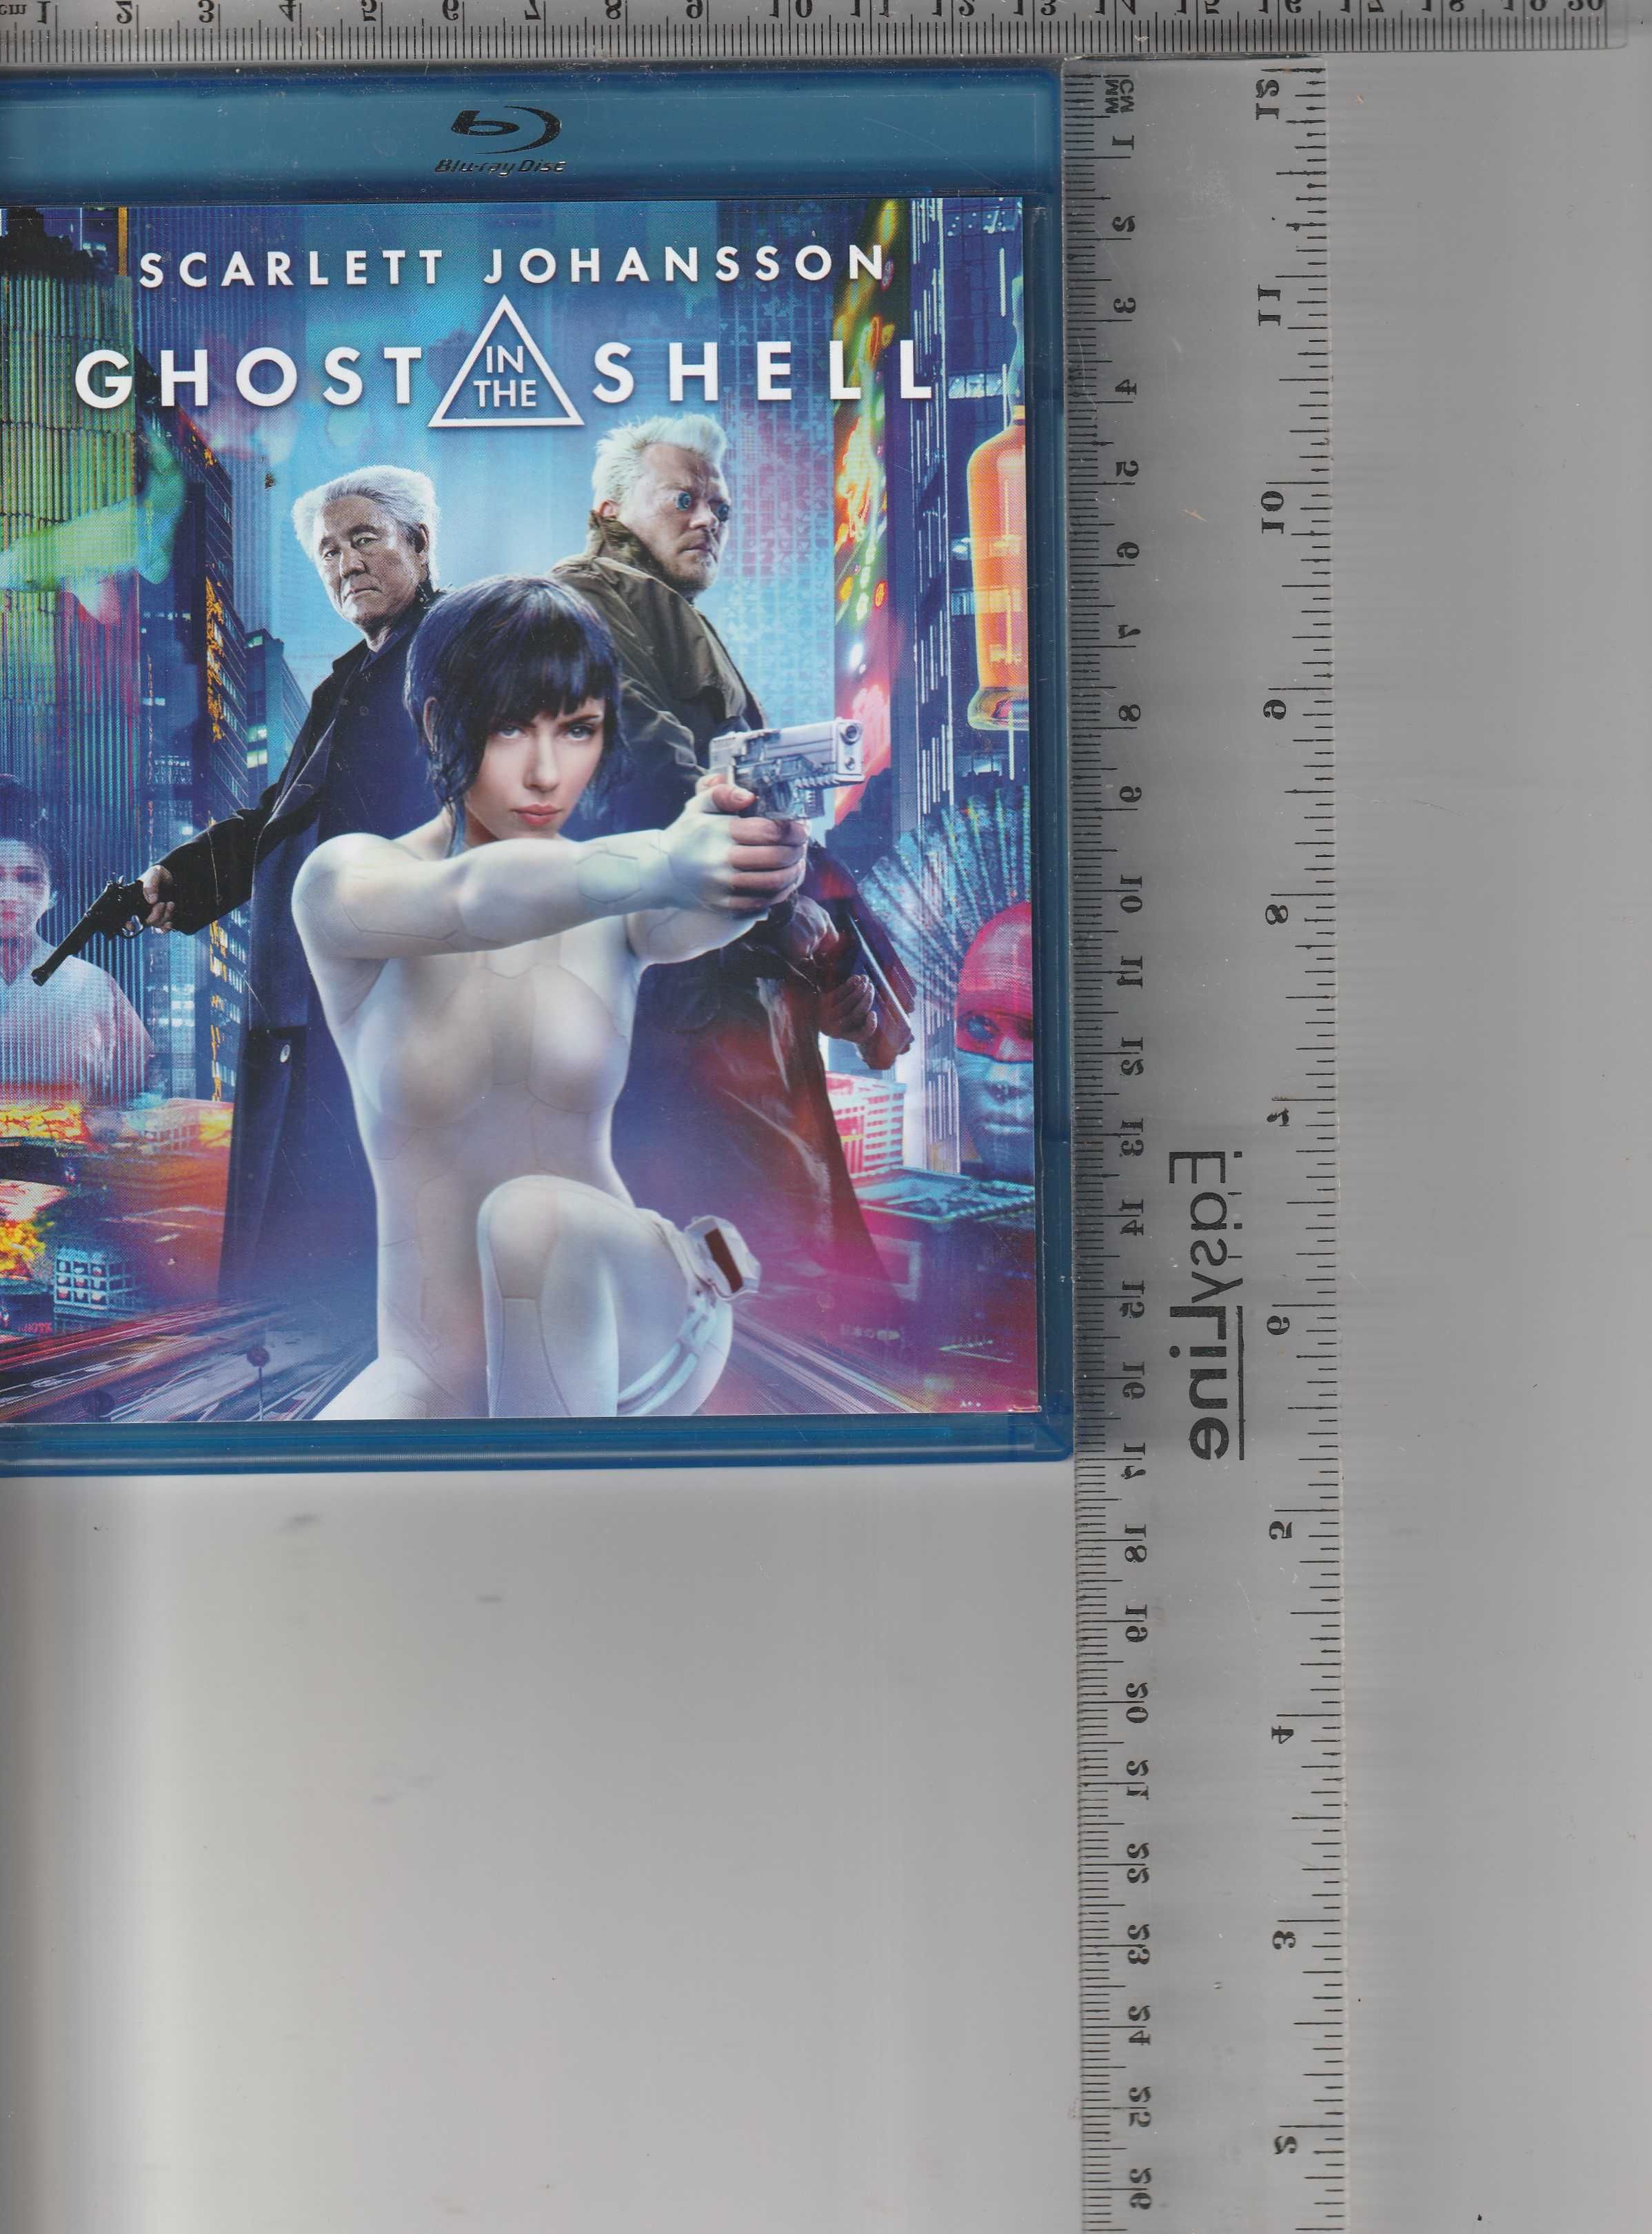 Ghost In The Shell Scarlett Johansson Blu-ray